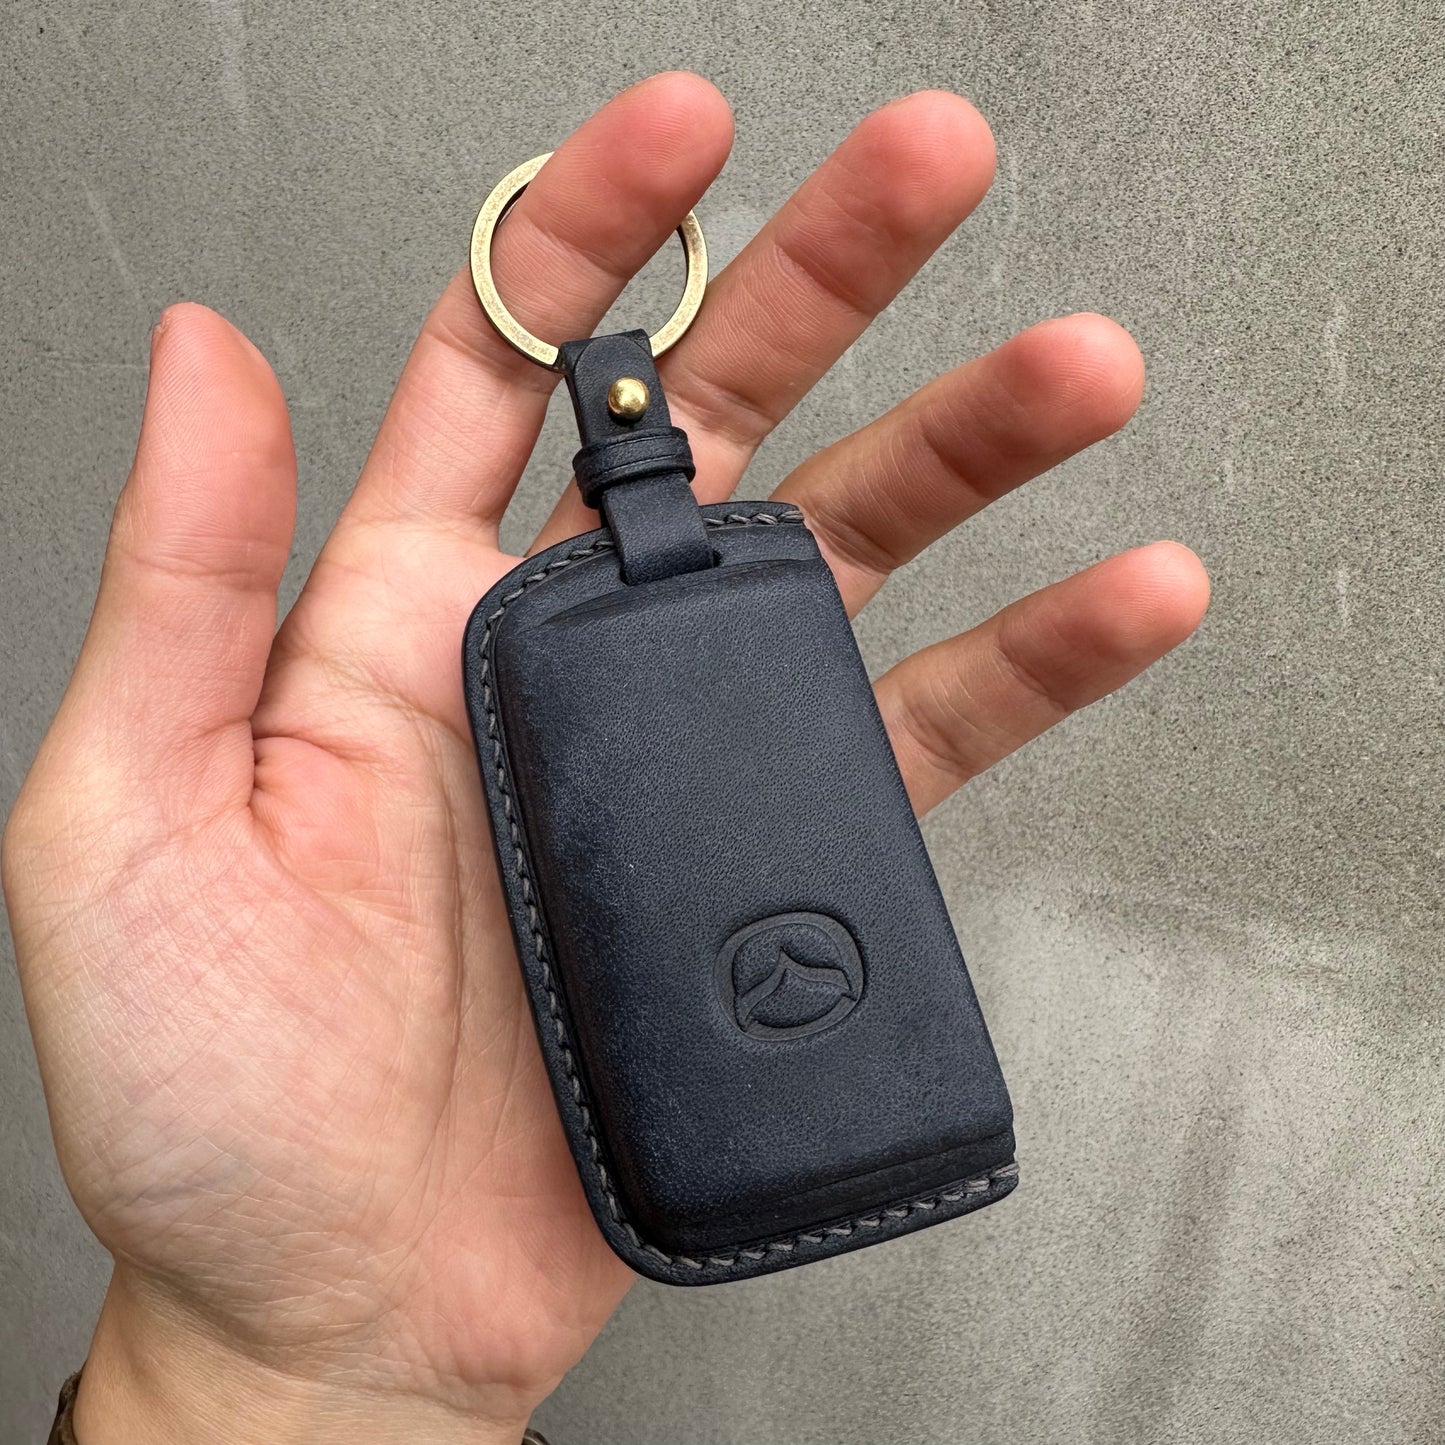 Mazda key fob cover, Pueblo leather